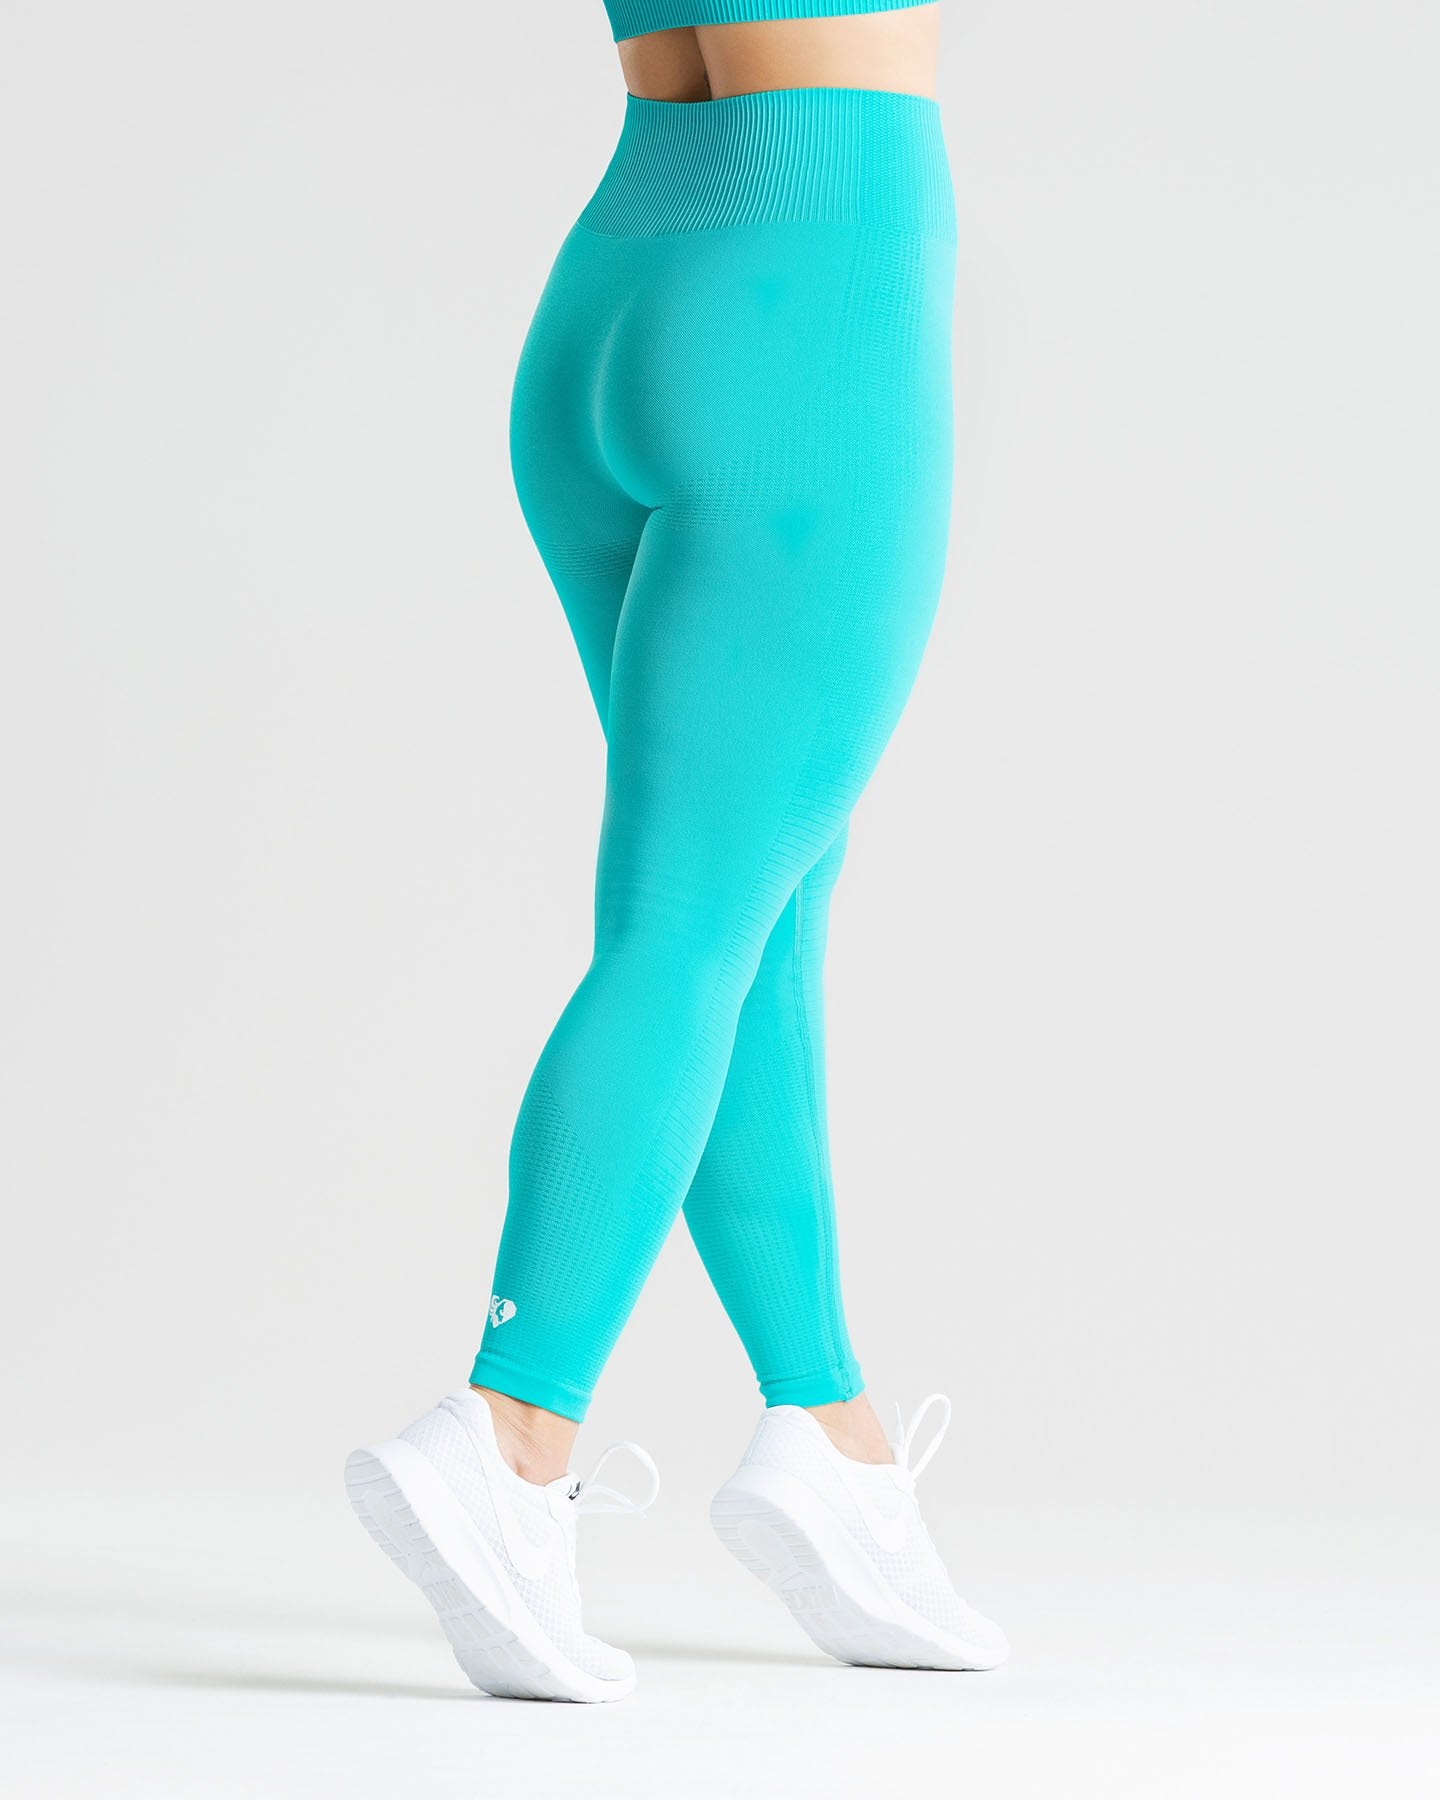 Aqua Nike Womens Athletic Shorts Star Leggings Size Small Lot 3 - Shop  Linda's Stuff